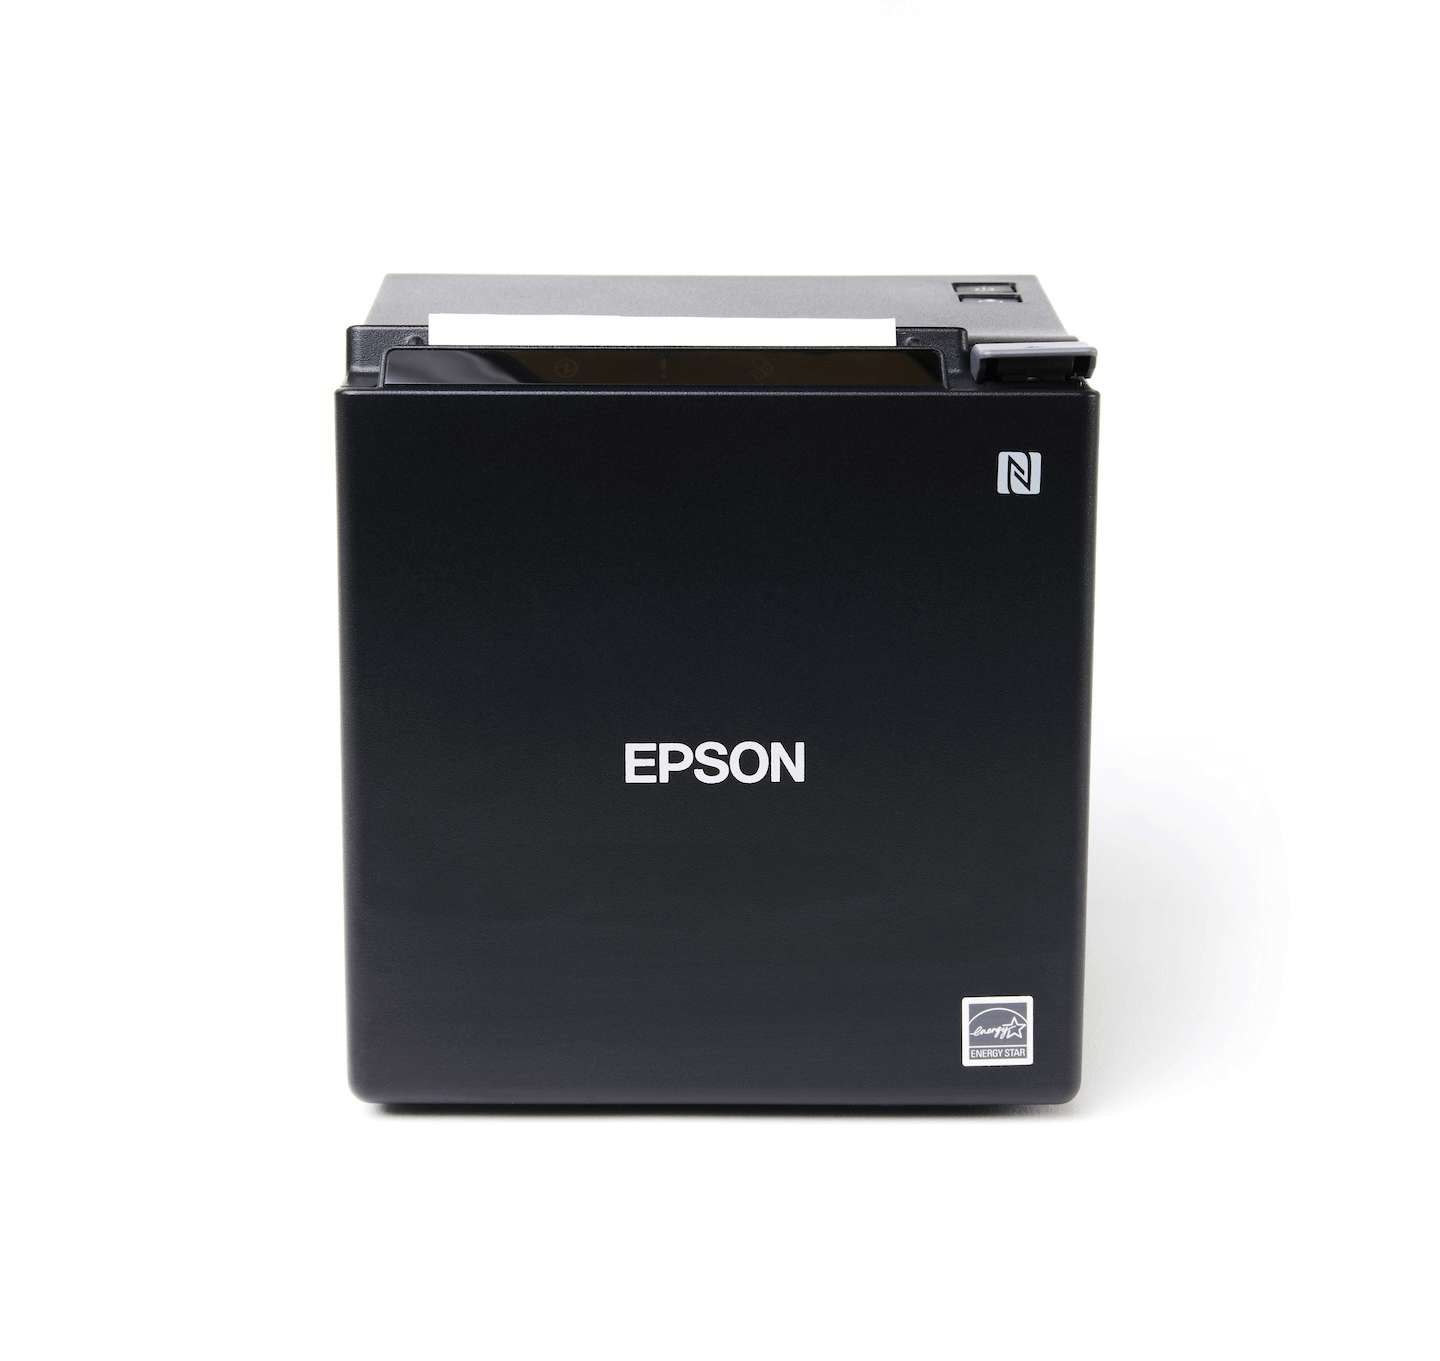 Front view of Epson TM-m30III printer.